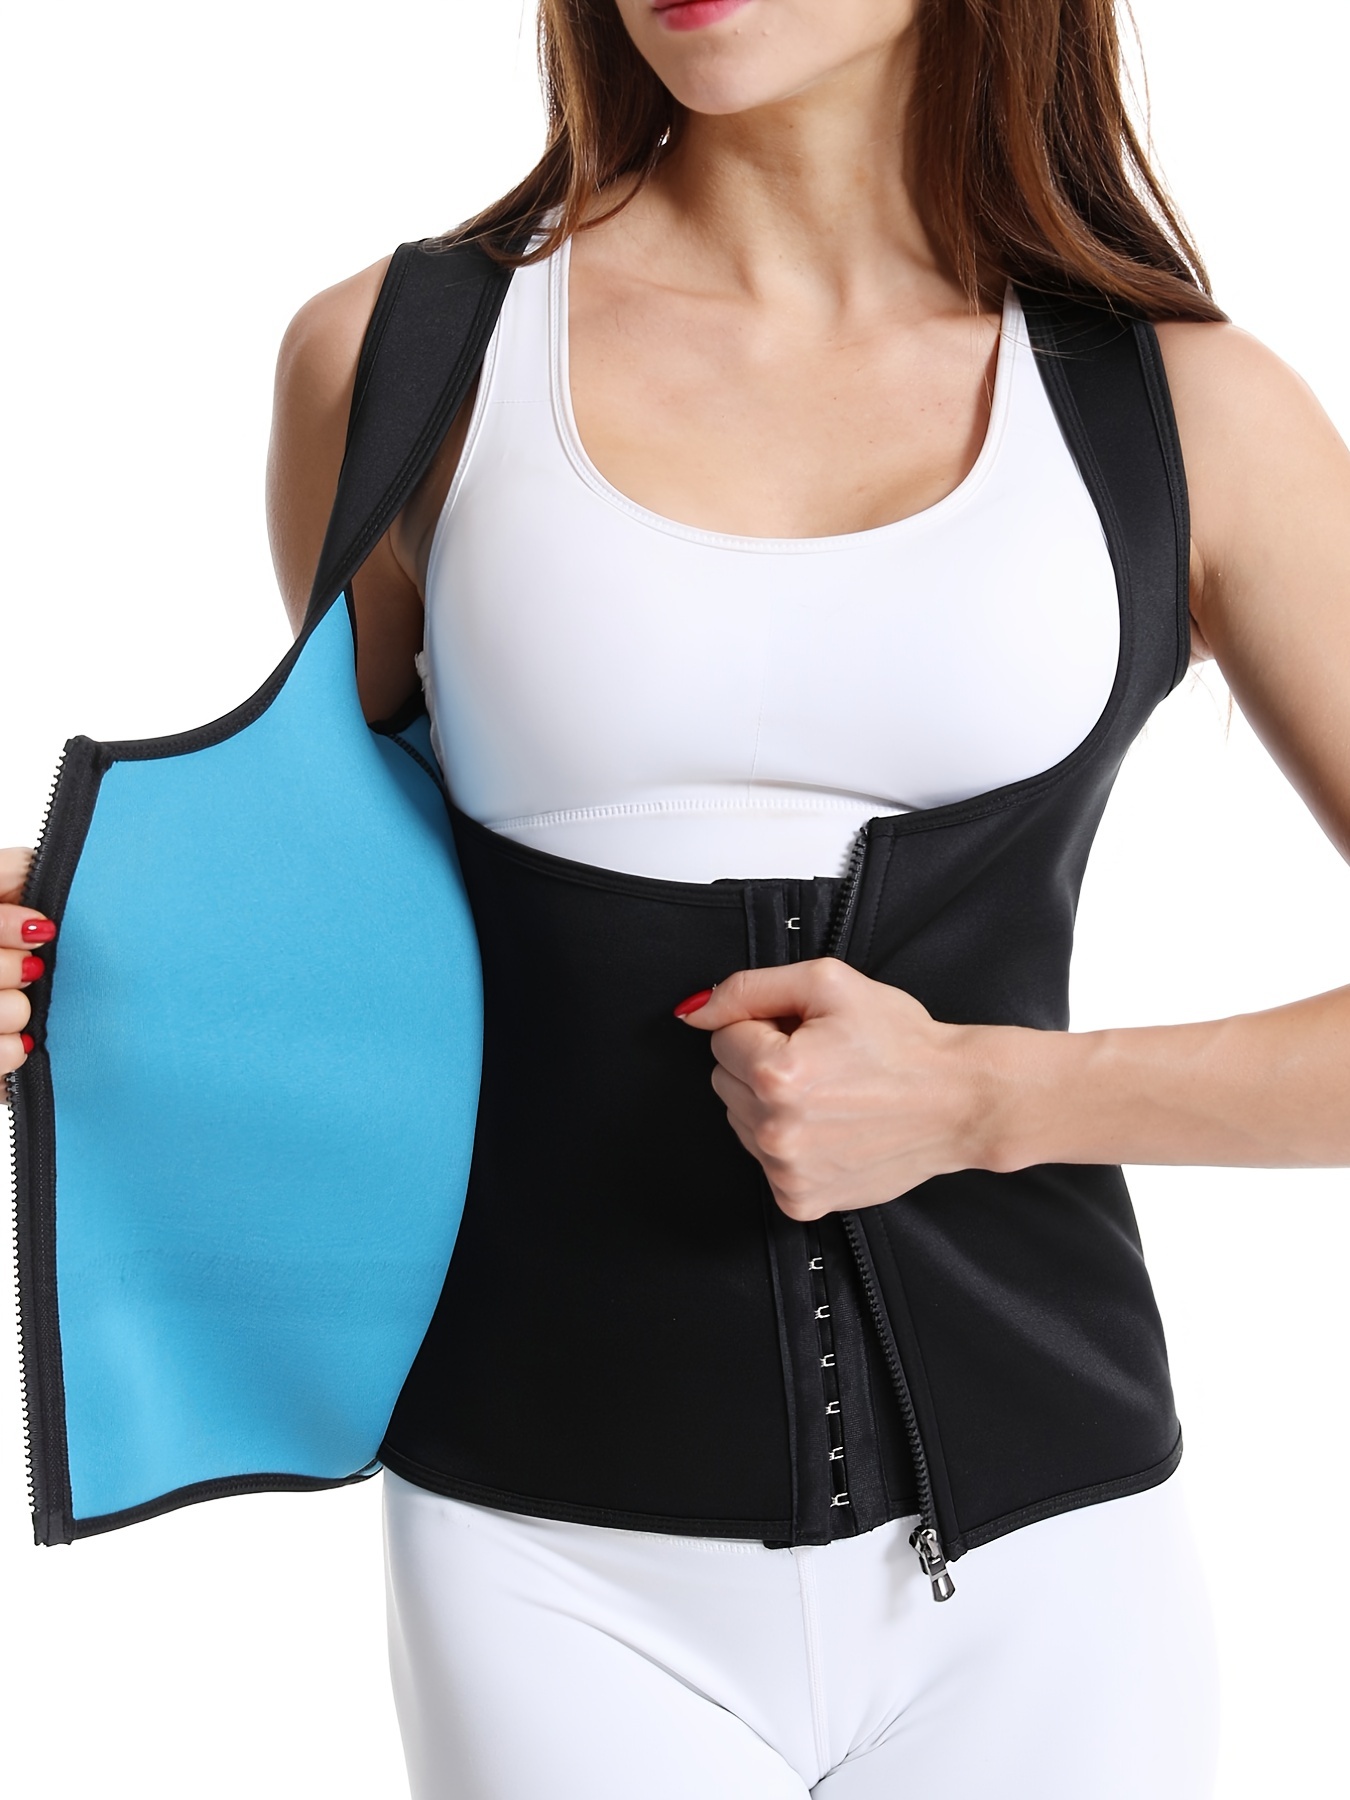 MERYOSZ Full Body Waist Trainer for Women Zipper Tummy Control